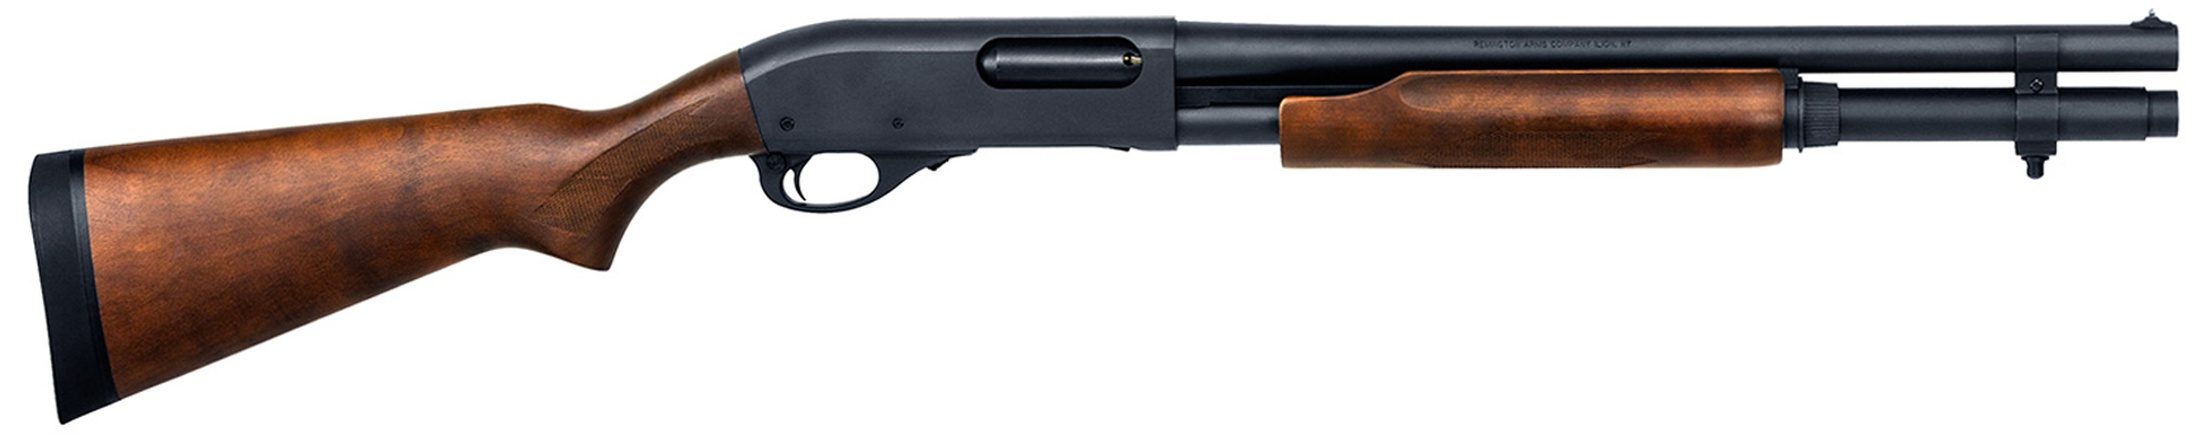 Don shot - Remington 870 Hardwood Home Defense